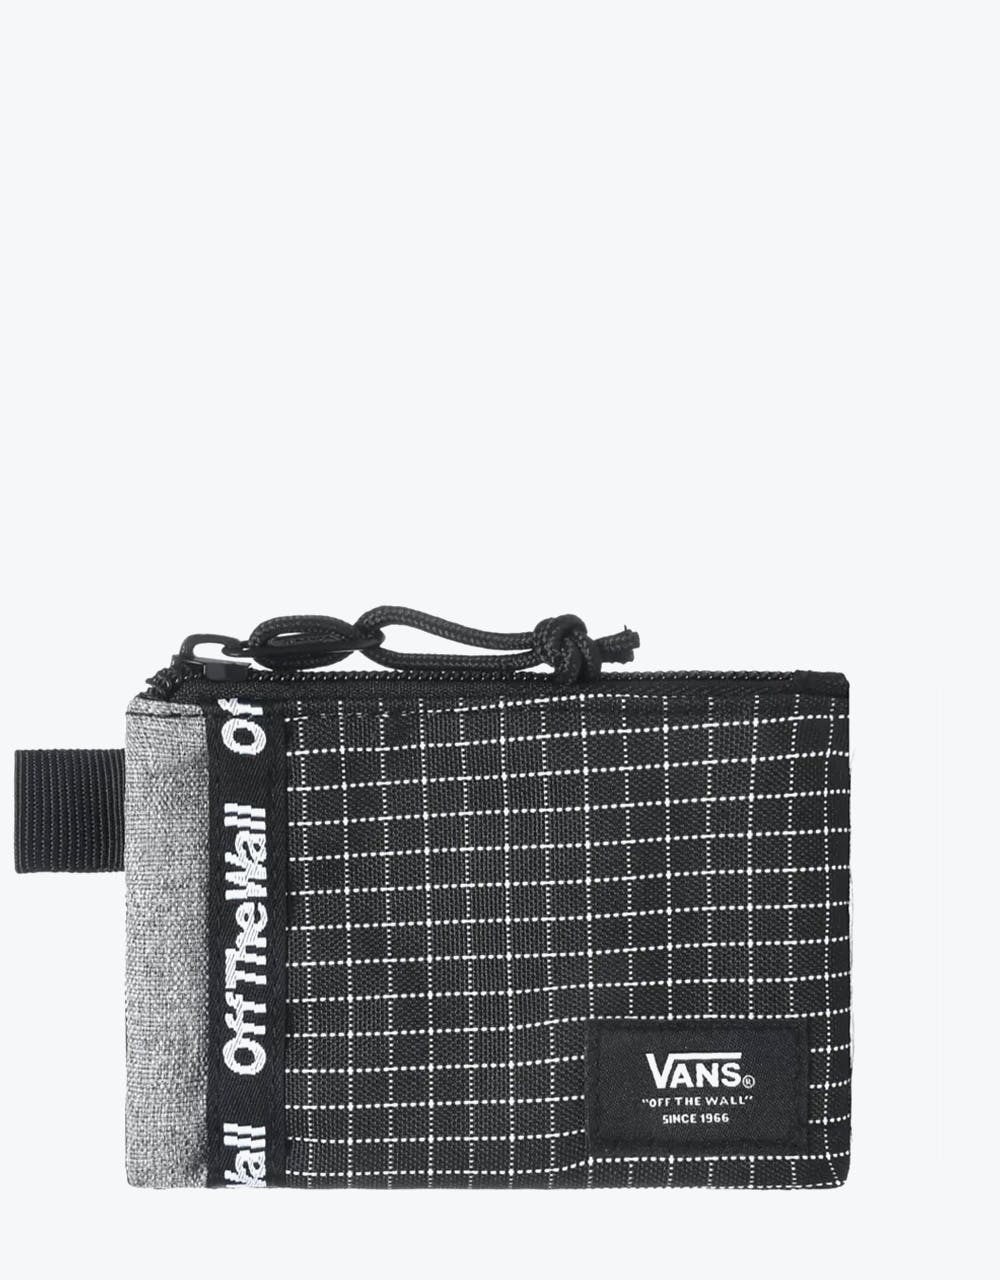 Vans Pouch Wallet - Black/White